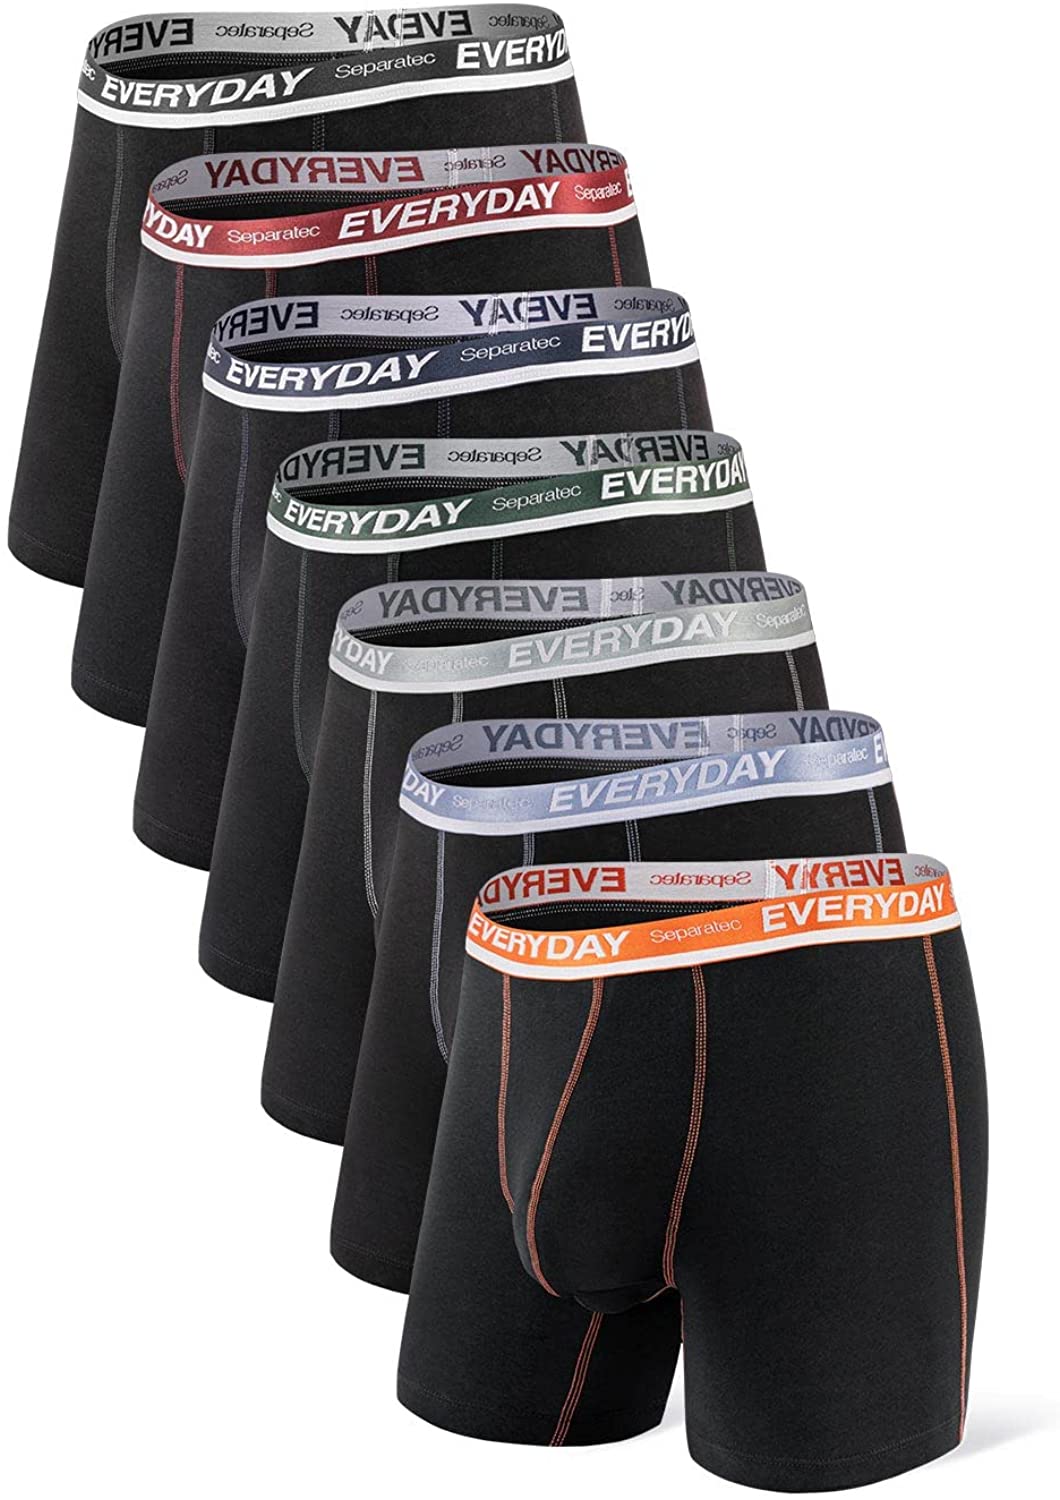 Separatec Men's Breathable Cotton Separated Pouch Colorful Boxer Briefs